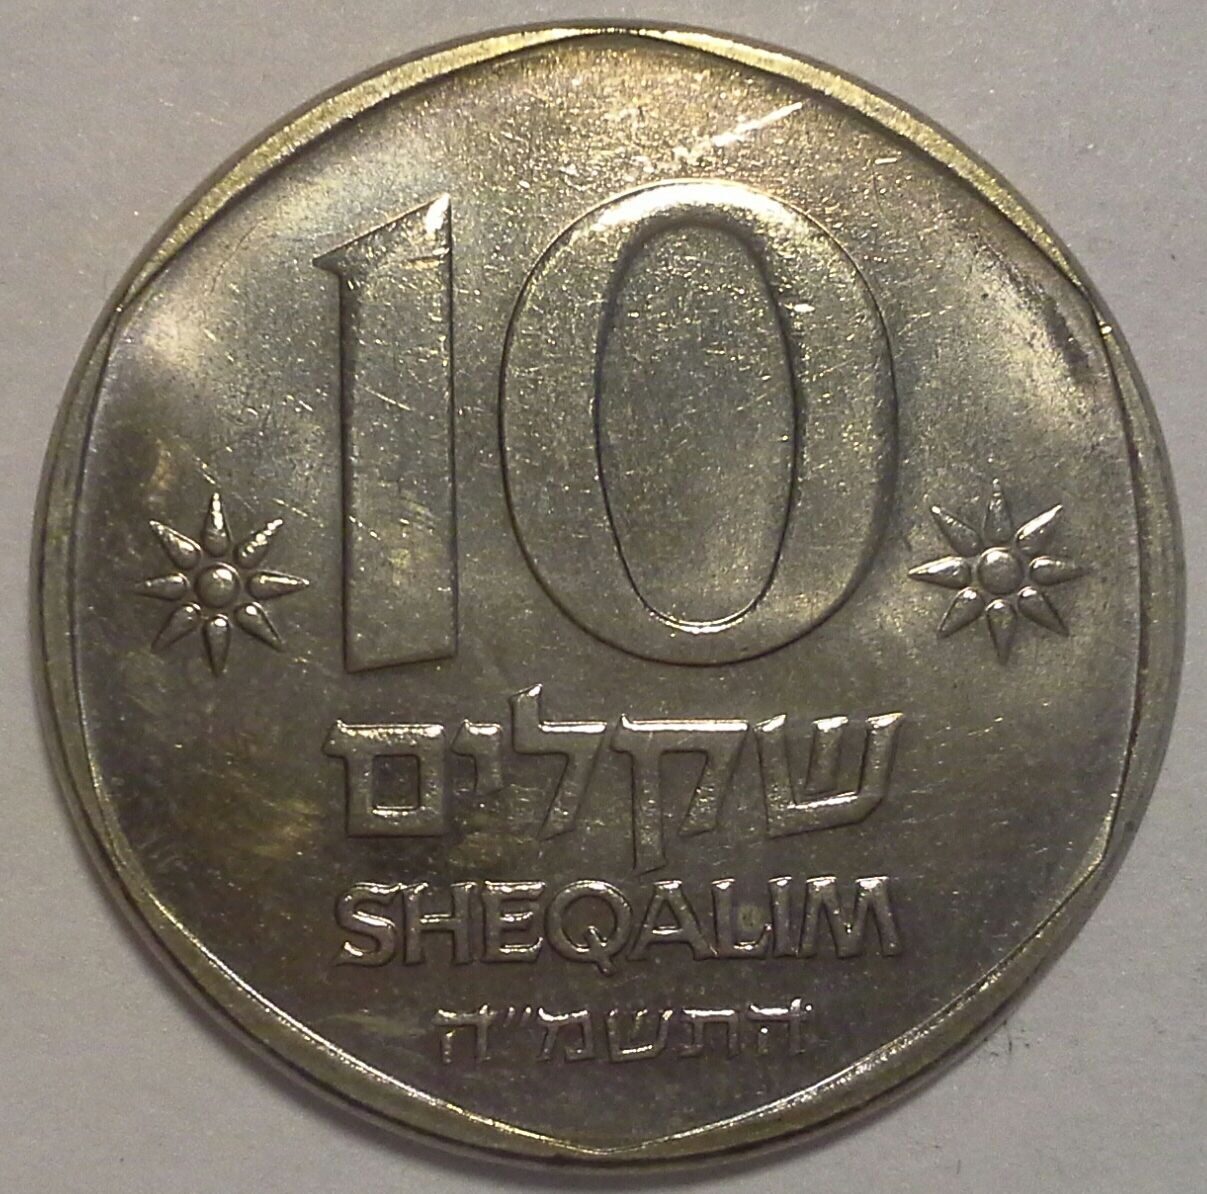 10 Шекелей 1985. 10 Шекелей фото. 10 Шекелей монета. 2 Шекеля в рублях. 600 шекелей